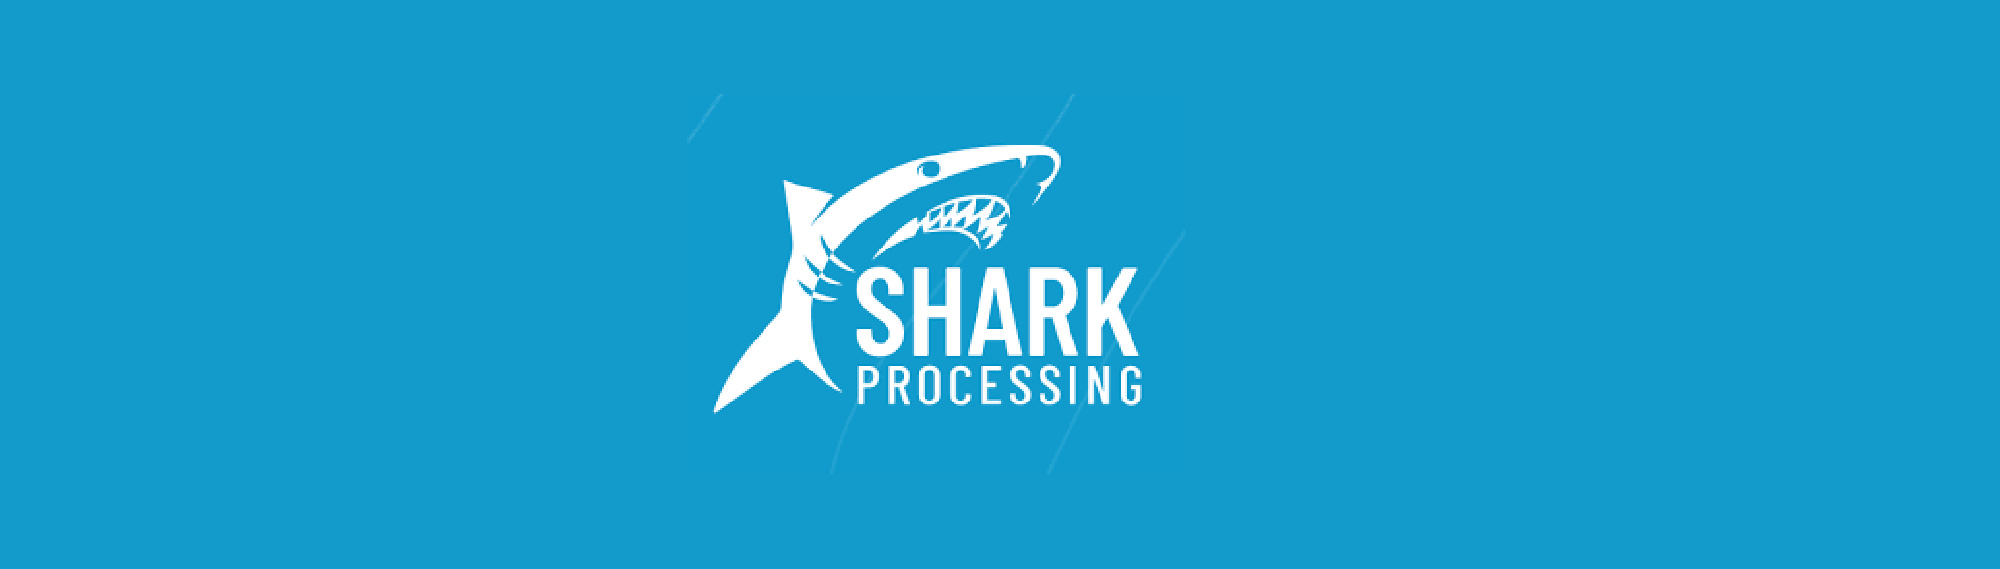 image of shark processing